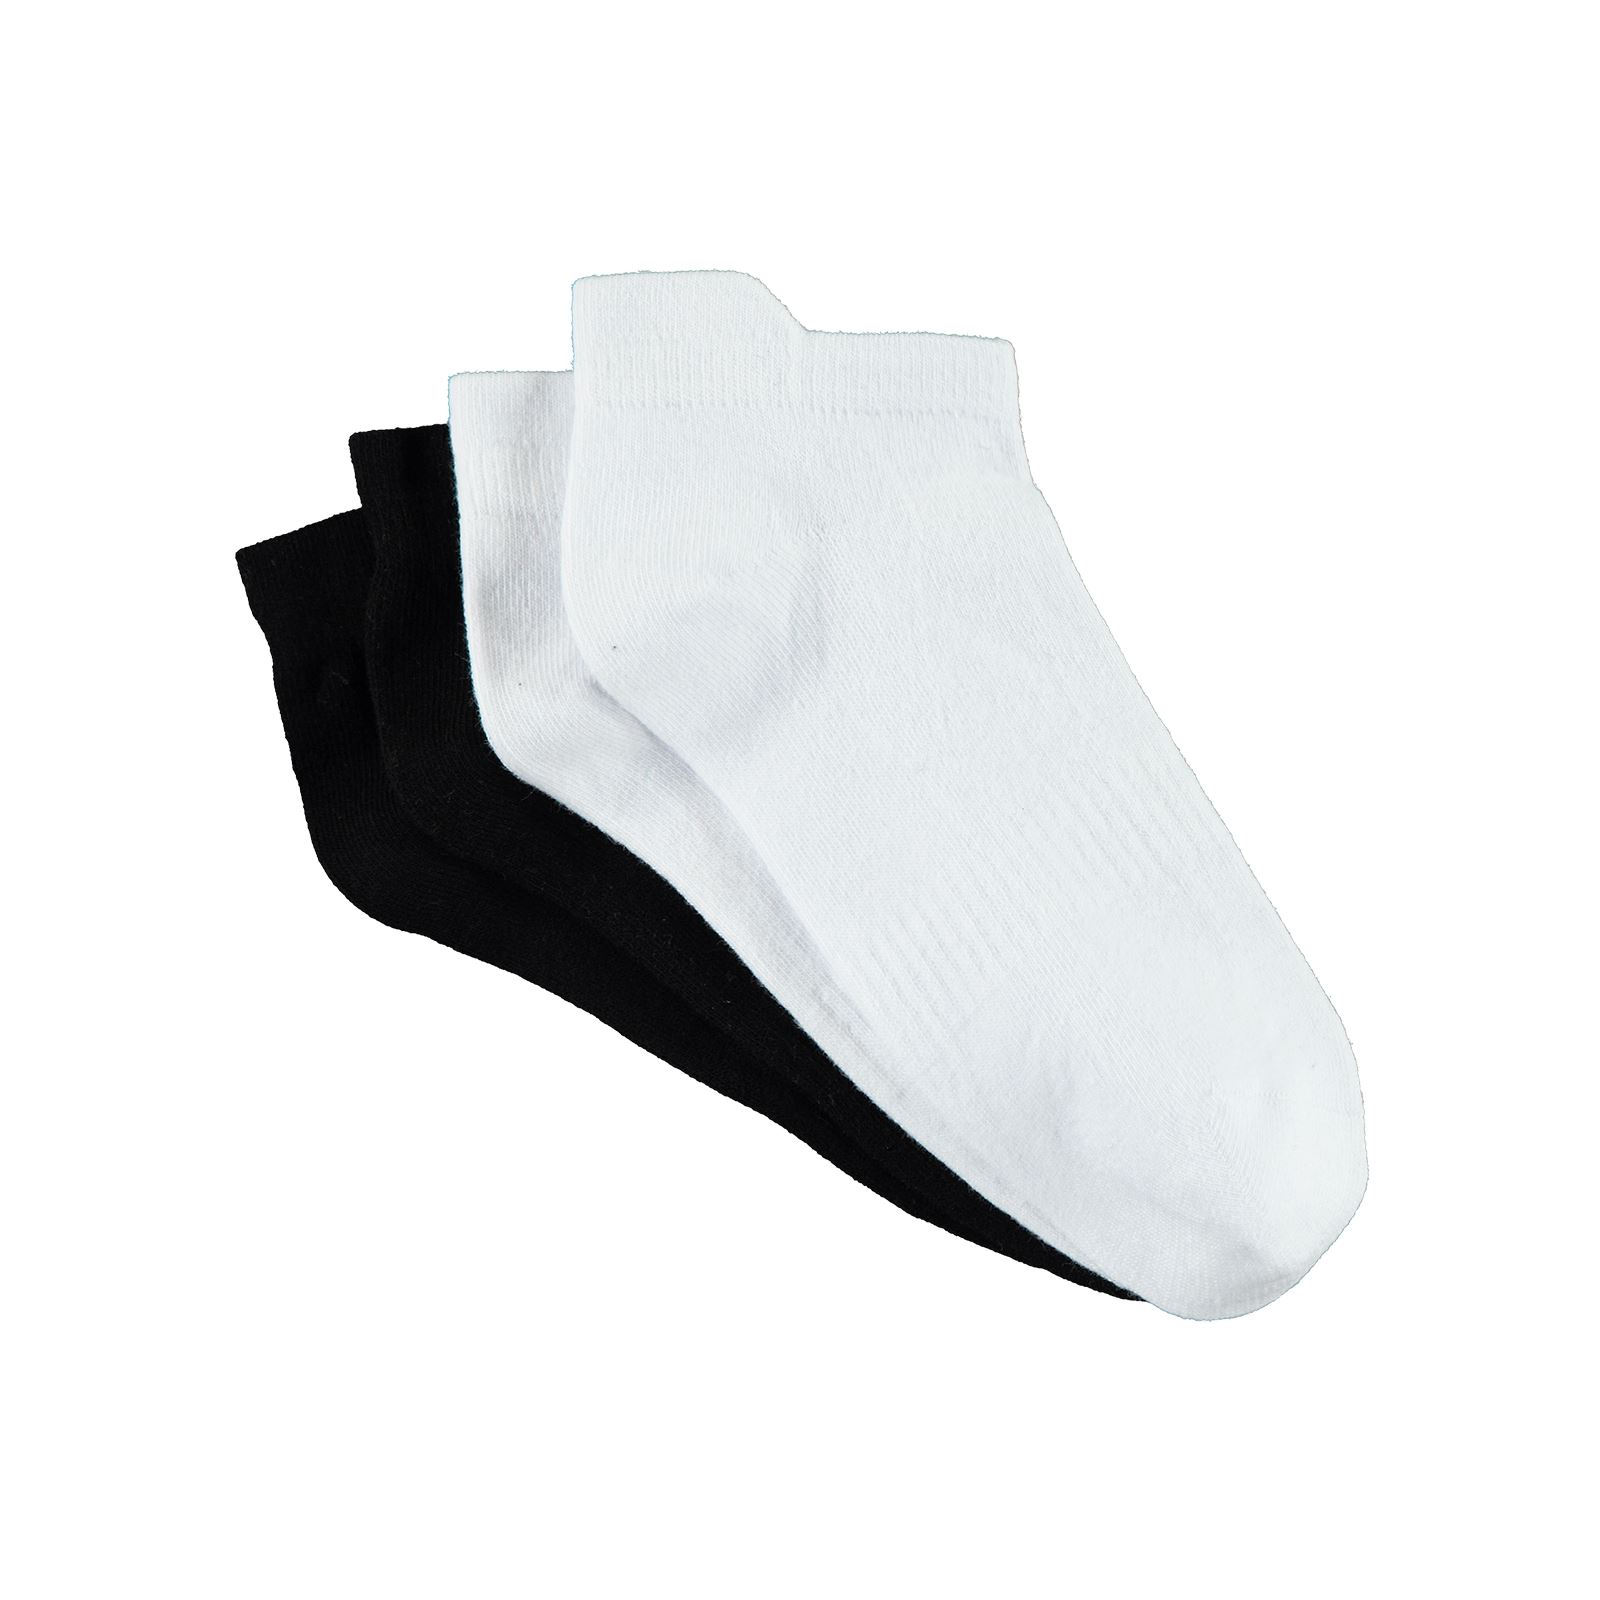 Gzn Erkek 2'li Dikişsiz Patik Çorap 40-44 Numara Siyah-Beyaz